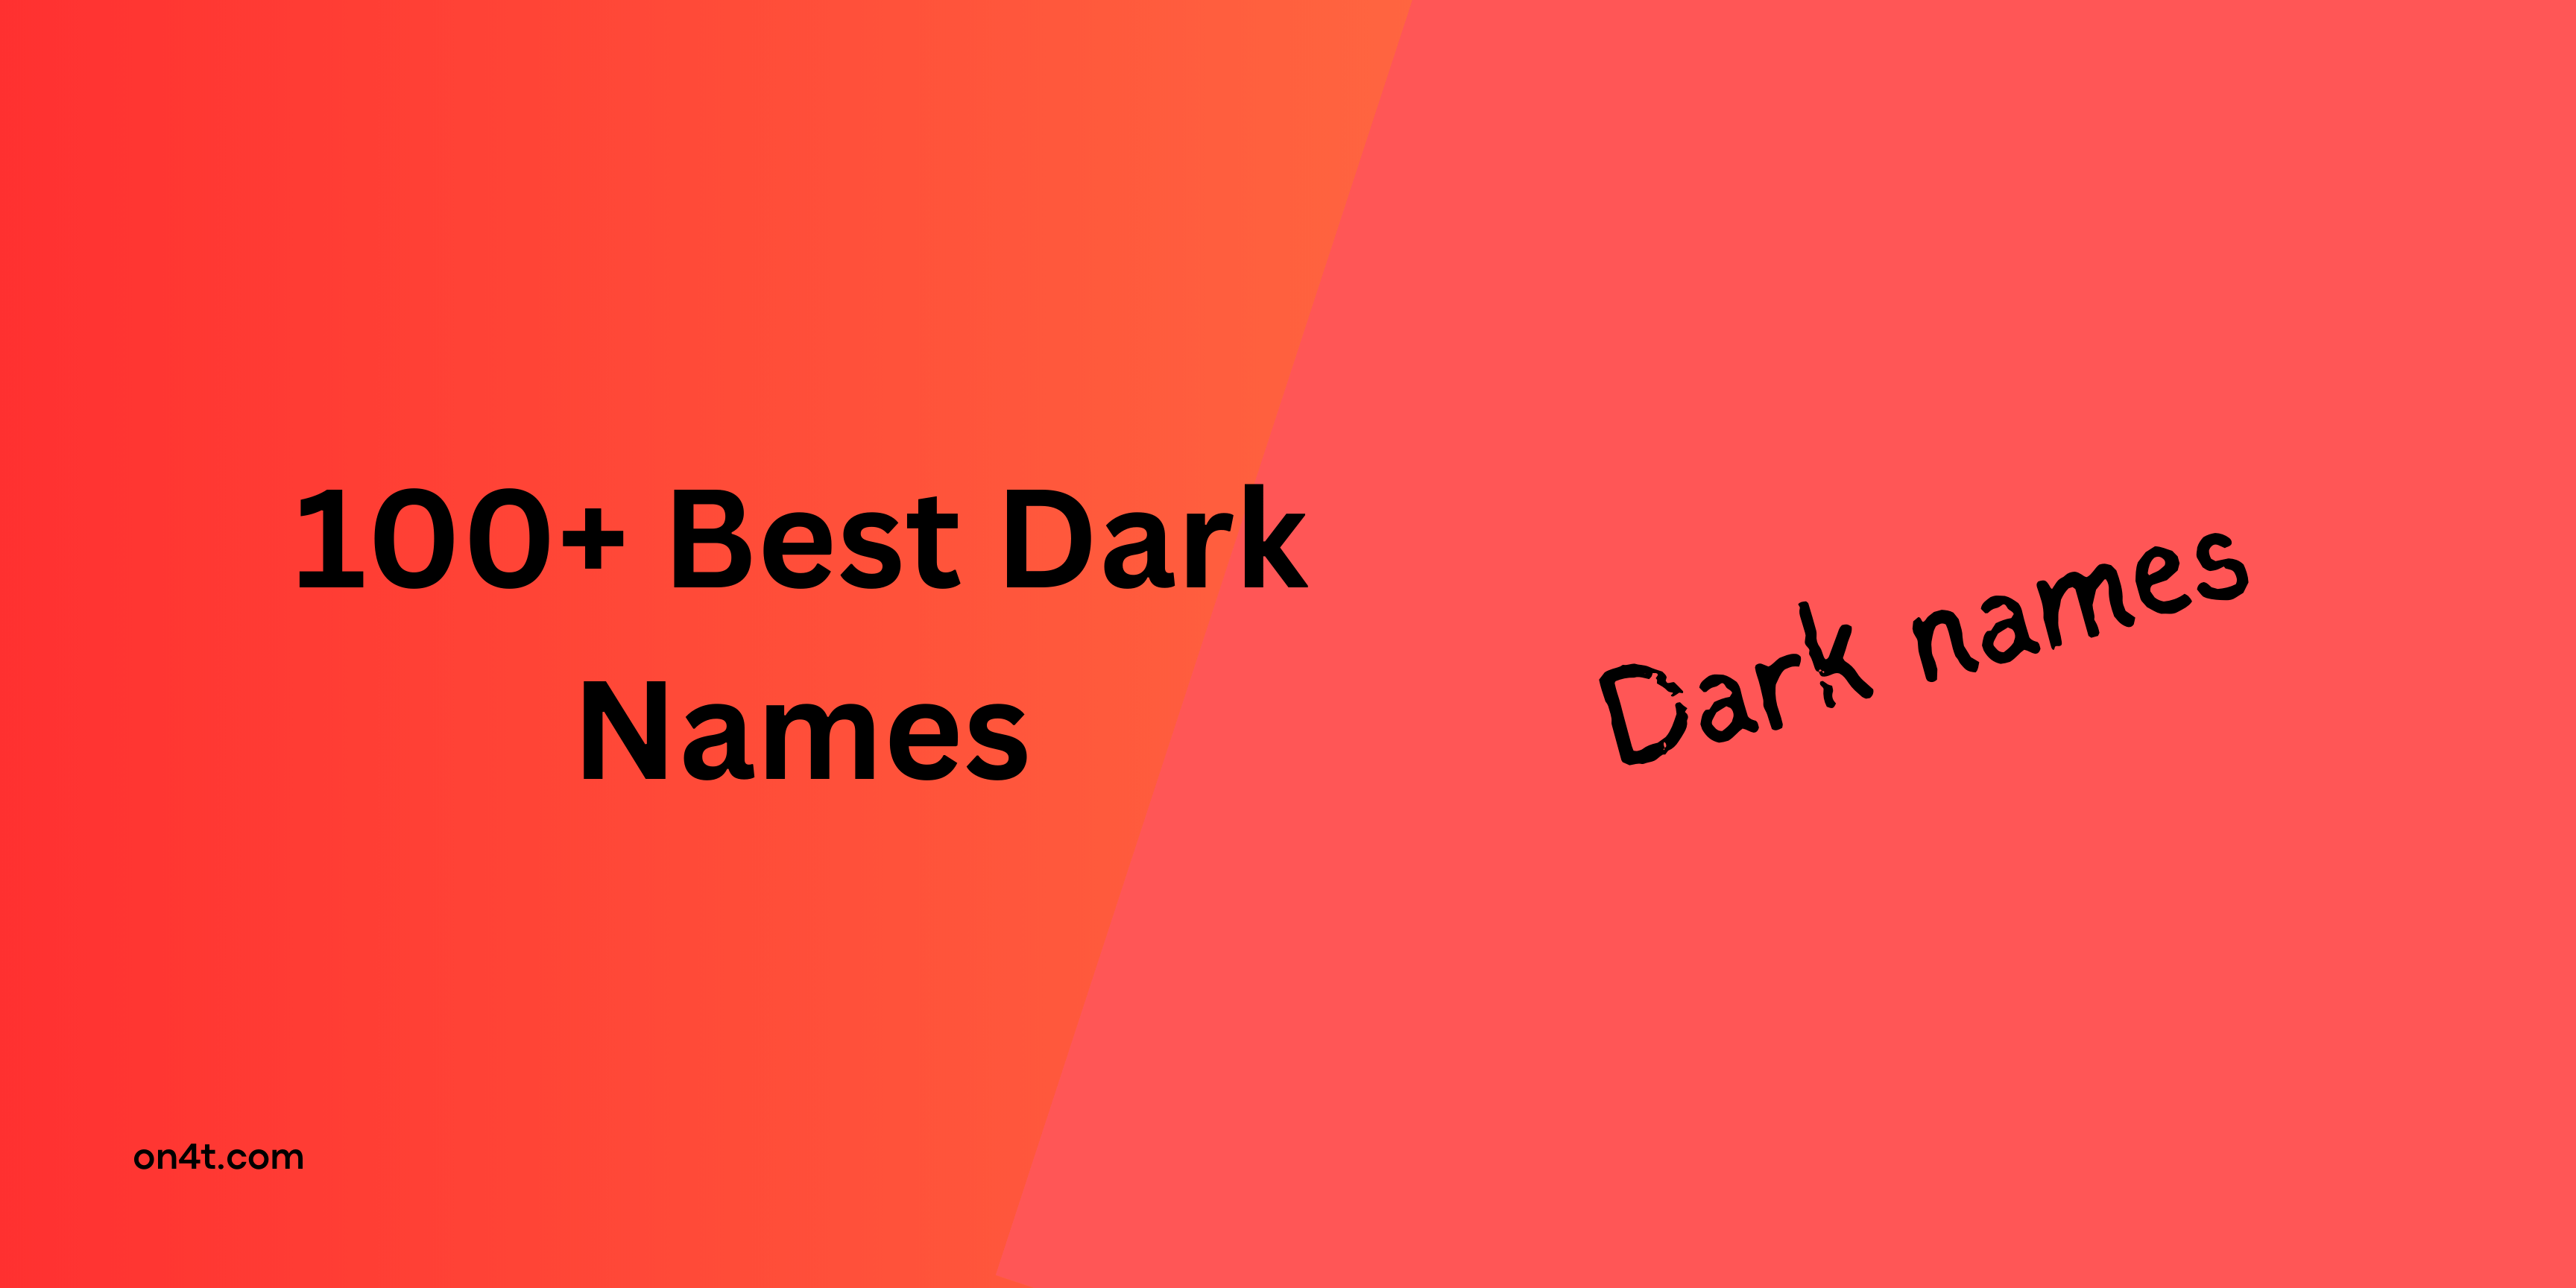 300+ Best Dark Names